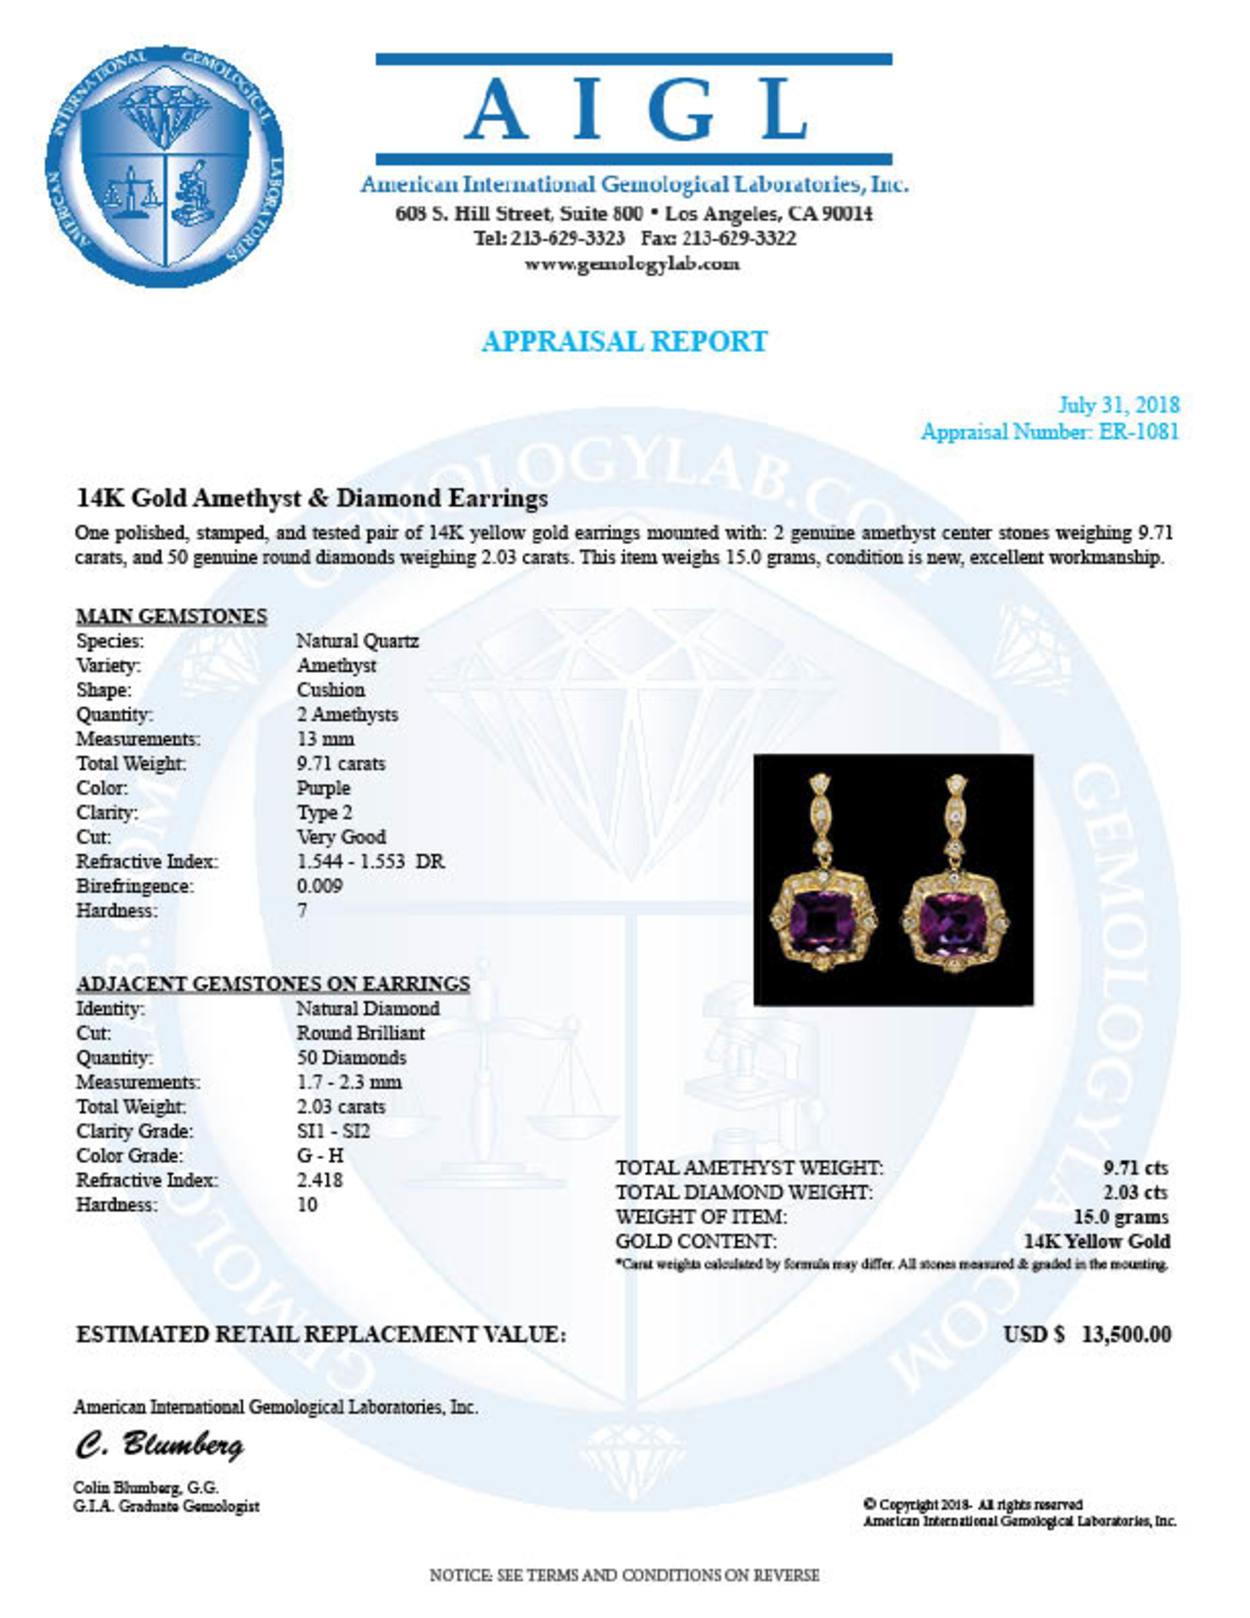 14k Gold 9.71ct Amethyst 2.03ct Diamond Earrings